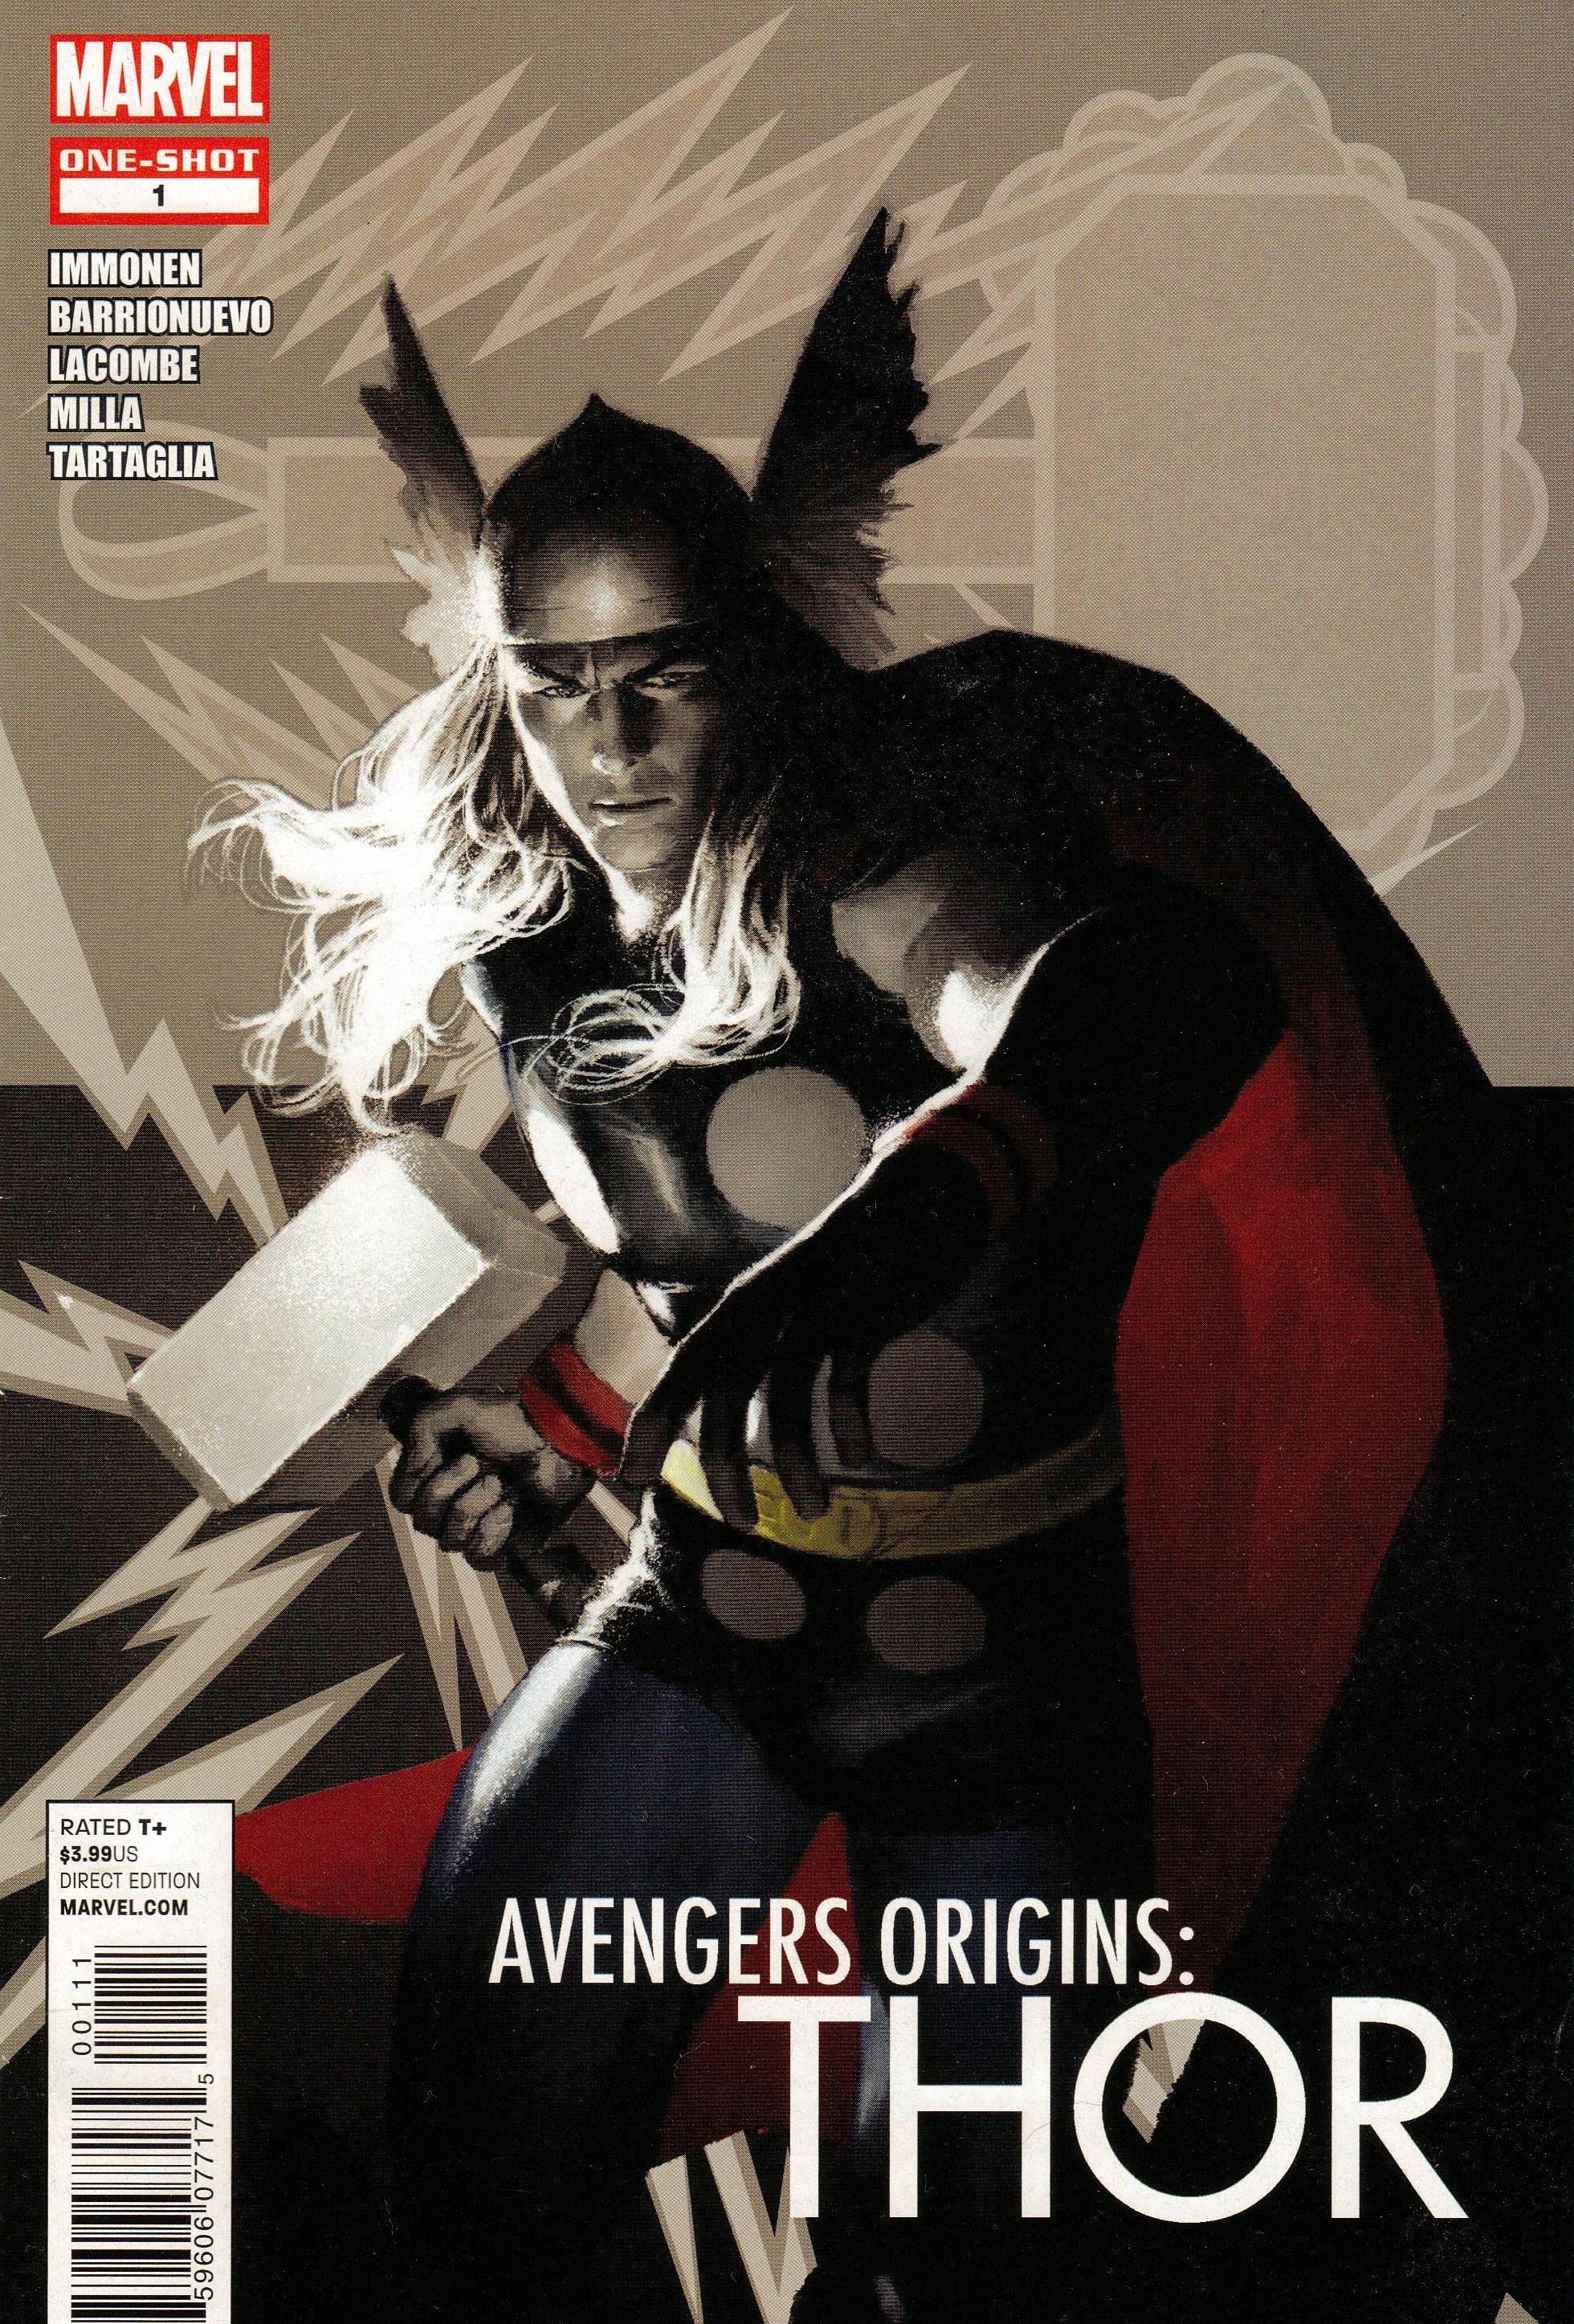 Avengers Origins: Thor Vol. 1 #1